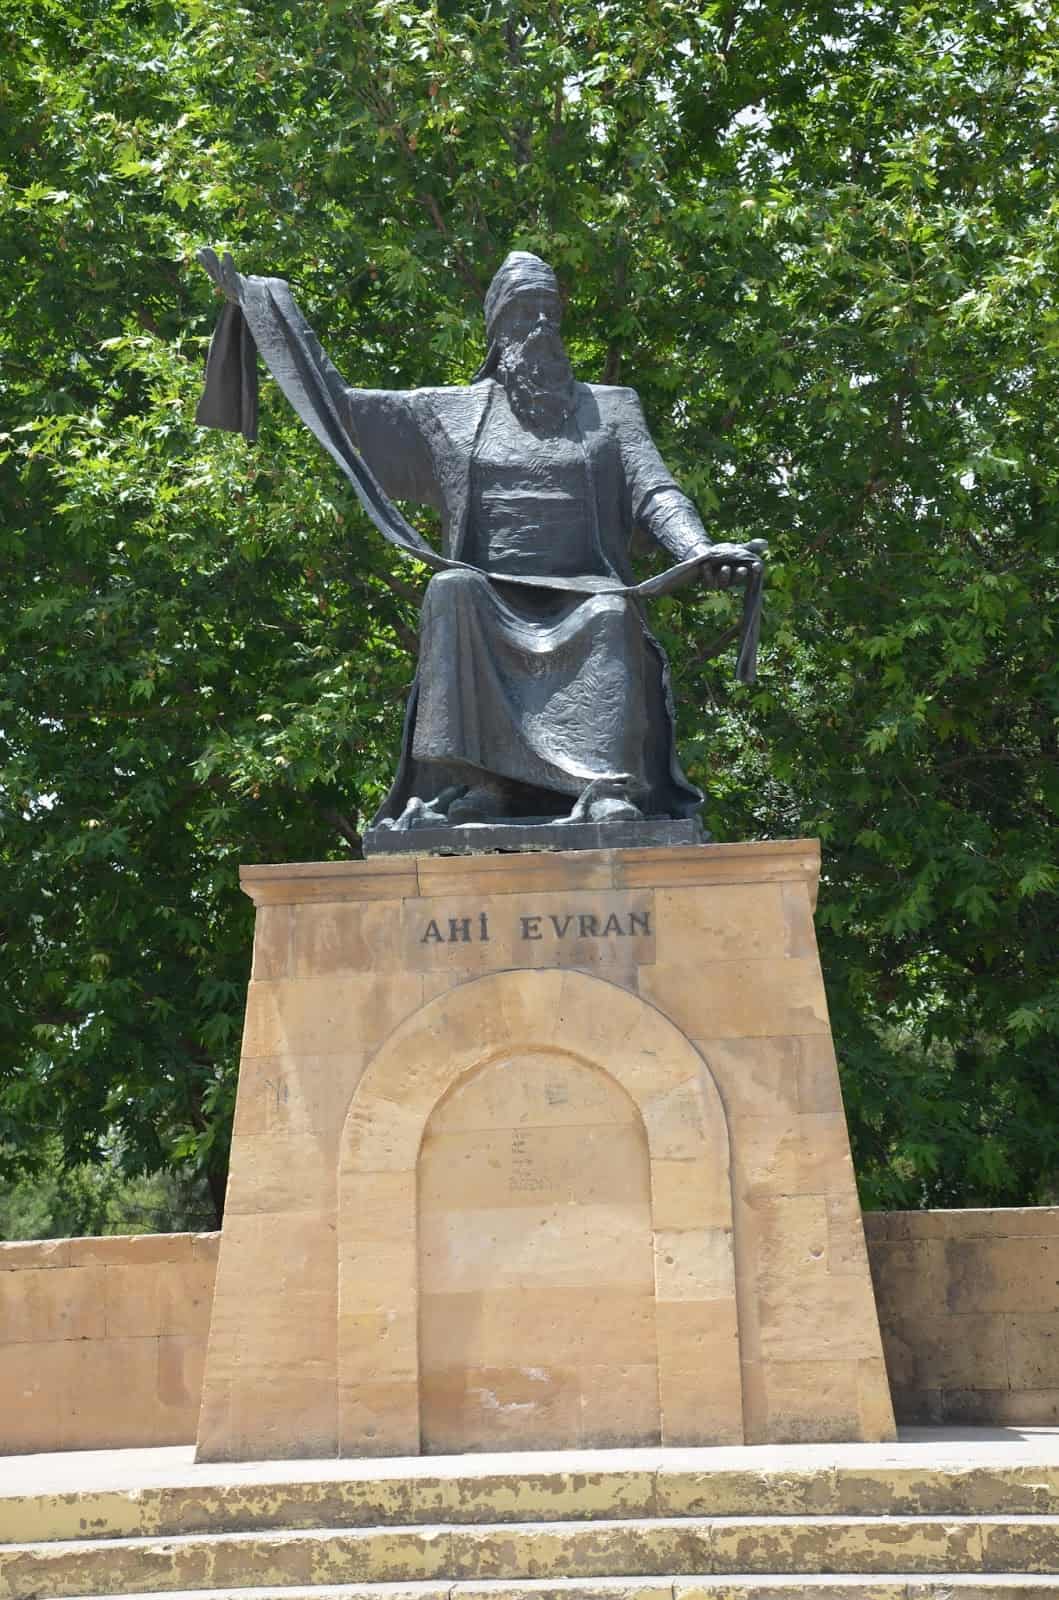 Ahi Evran monument in Kırşehir, Turkey